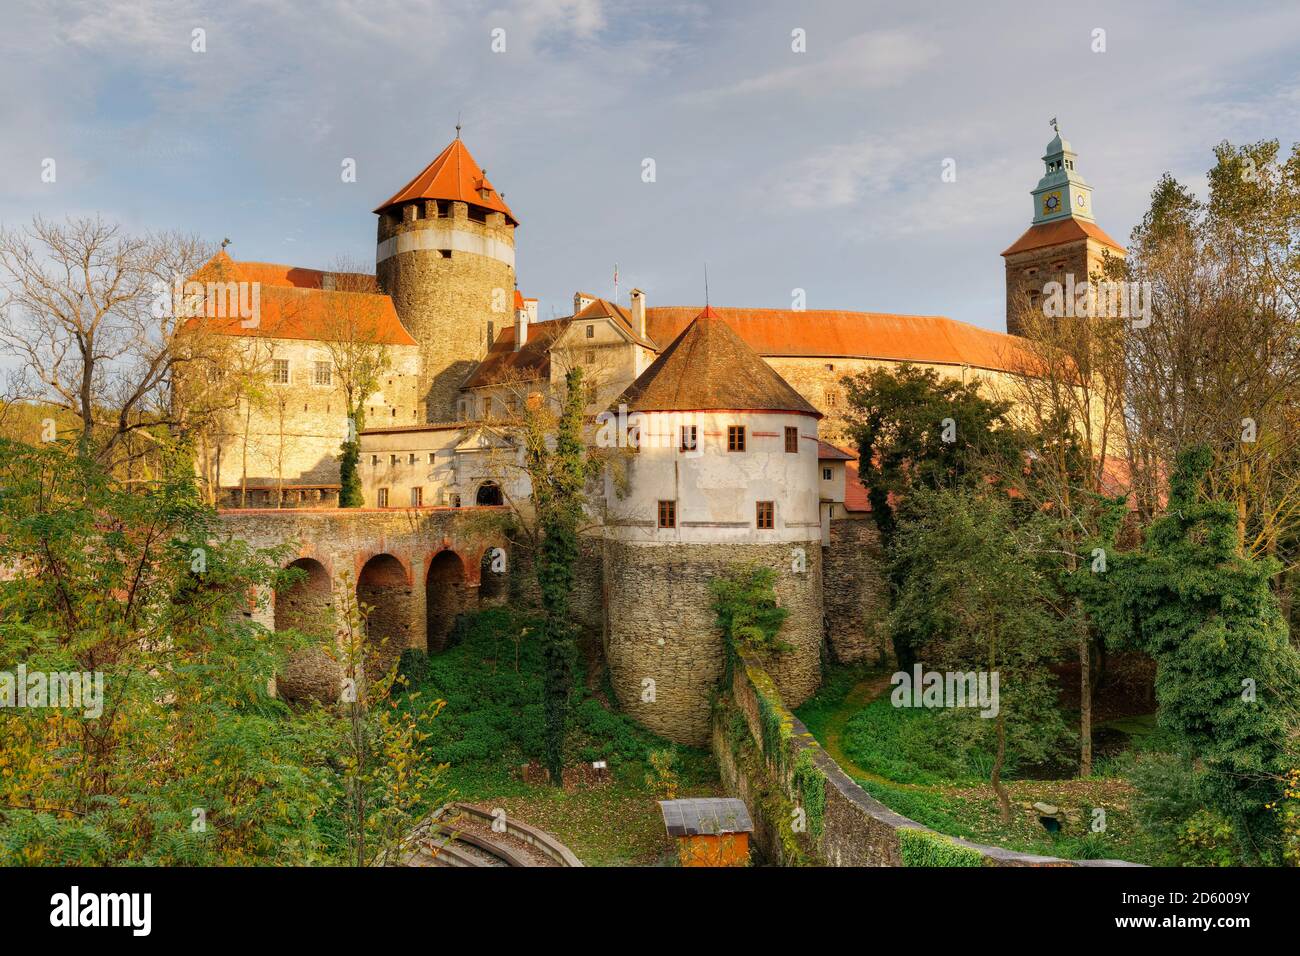 Austria, Stadtschlaining, Schlaining Castle Stock Photo